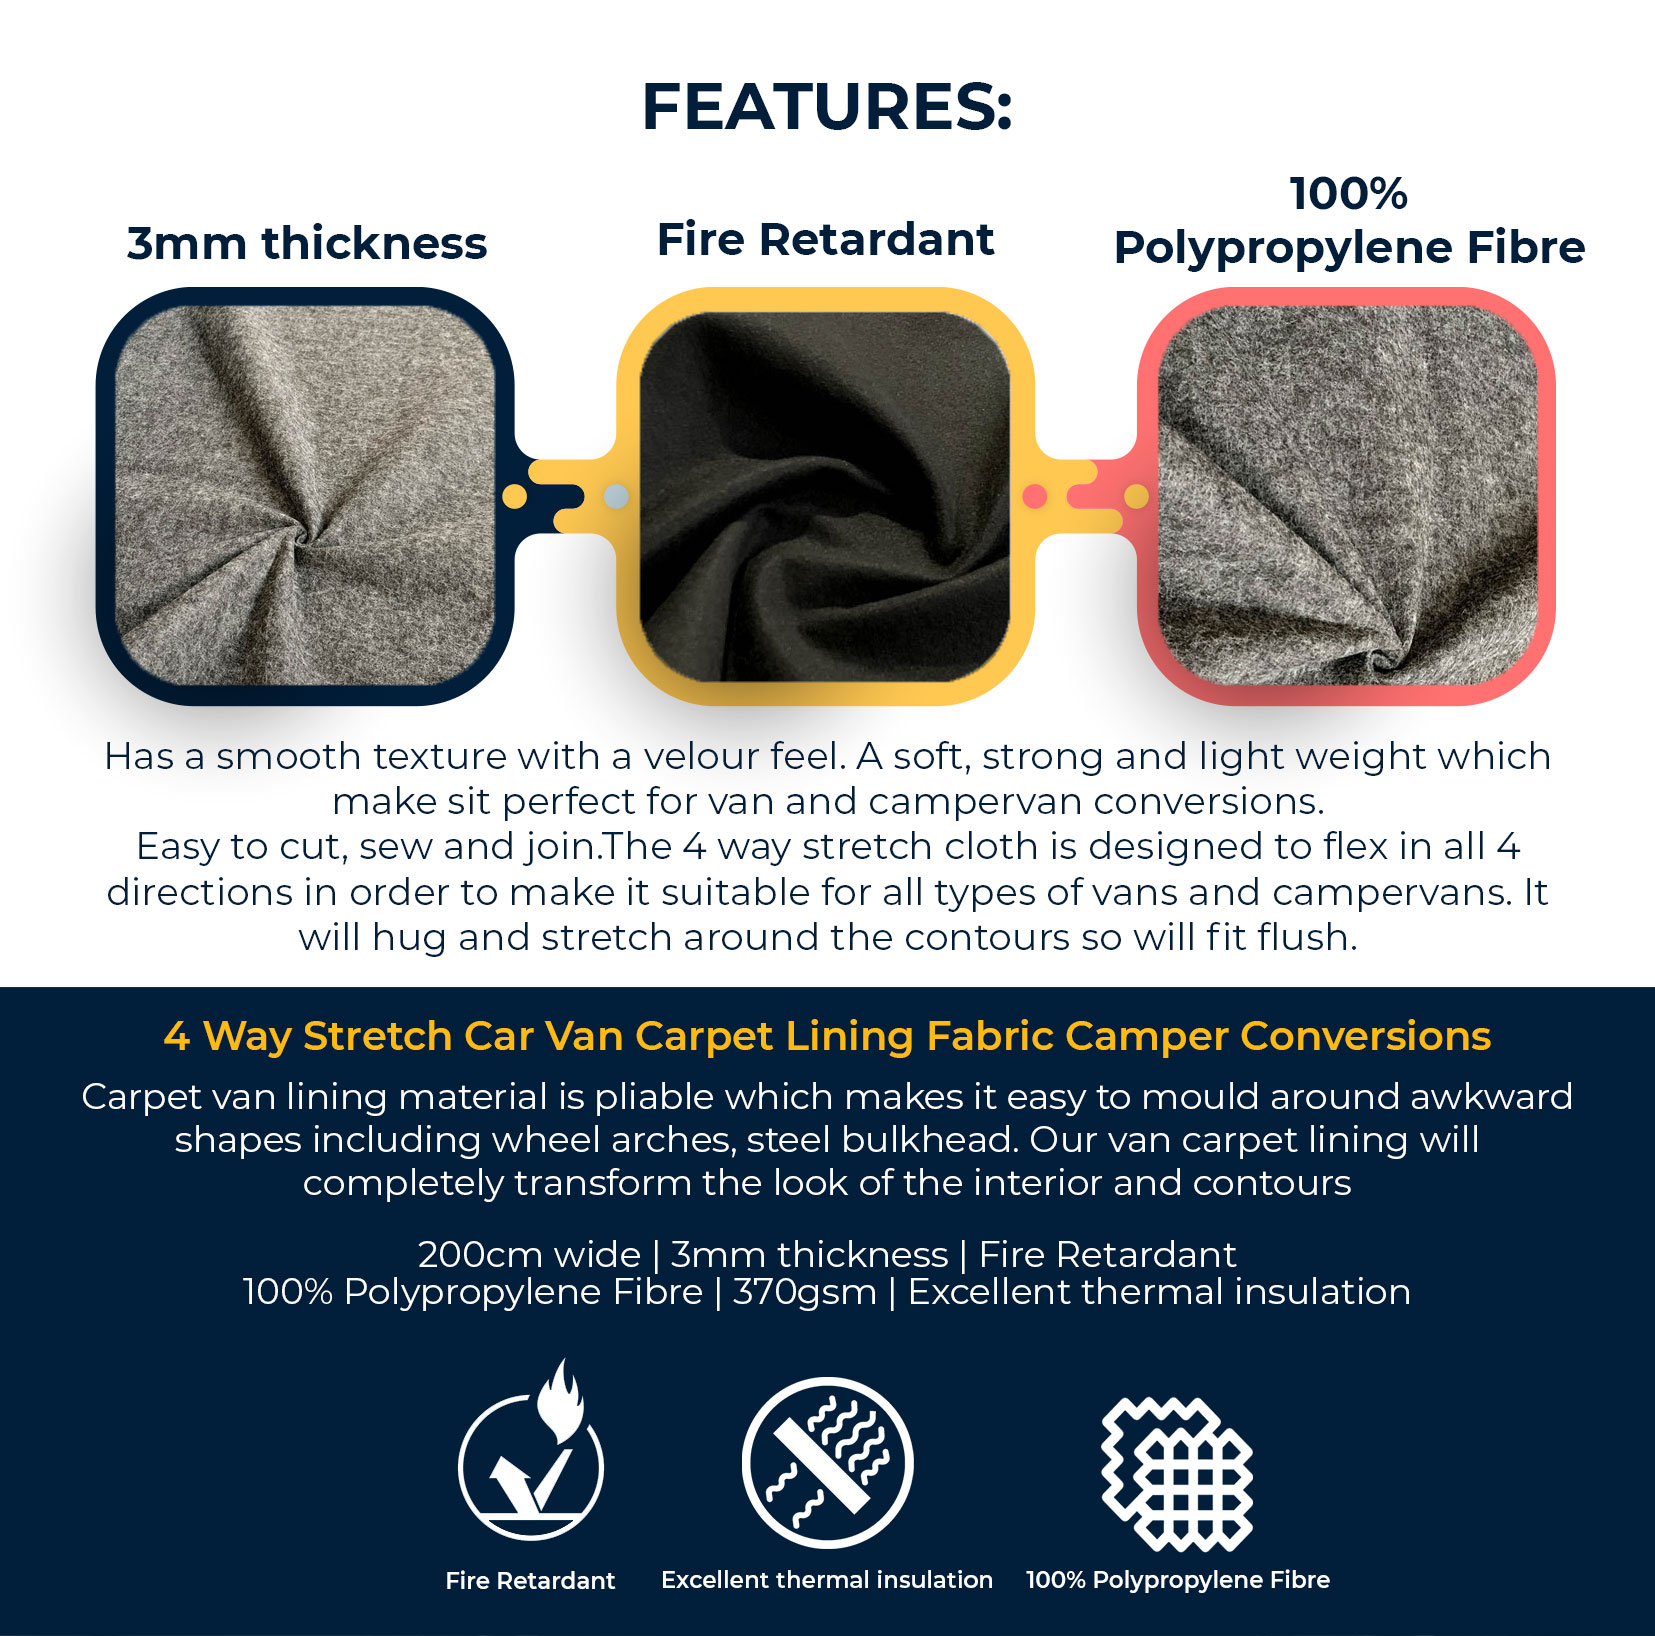 4 Way Stretch Car Van Carpet Lining Fabric Camper Conversions Features